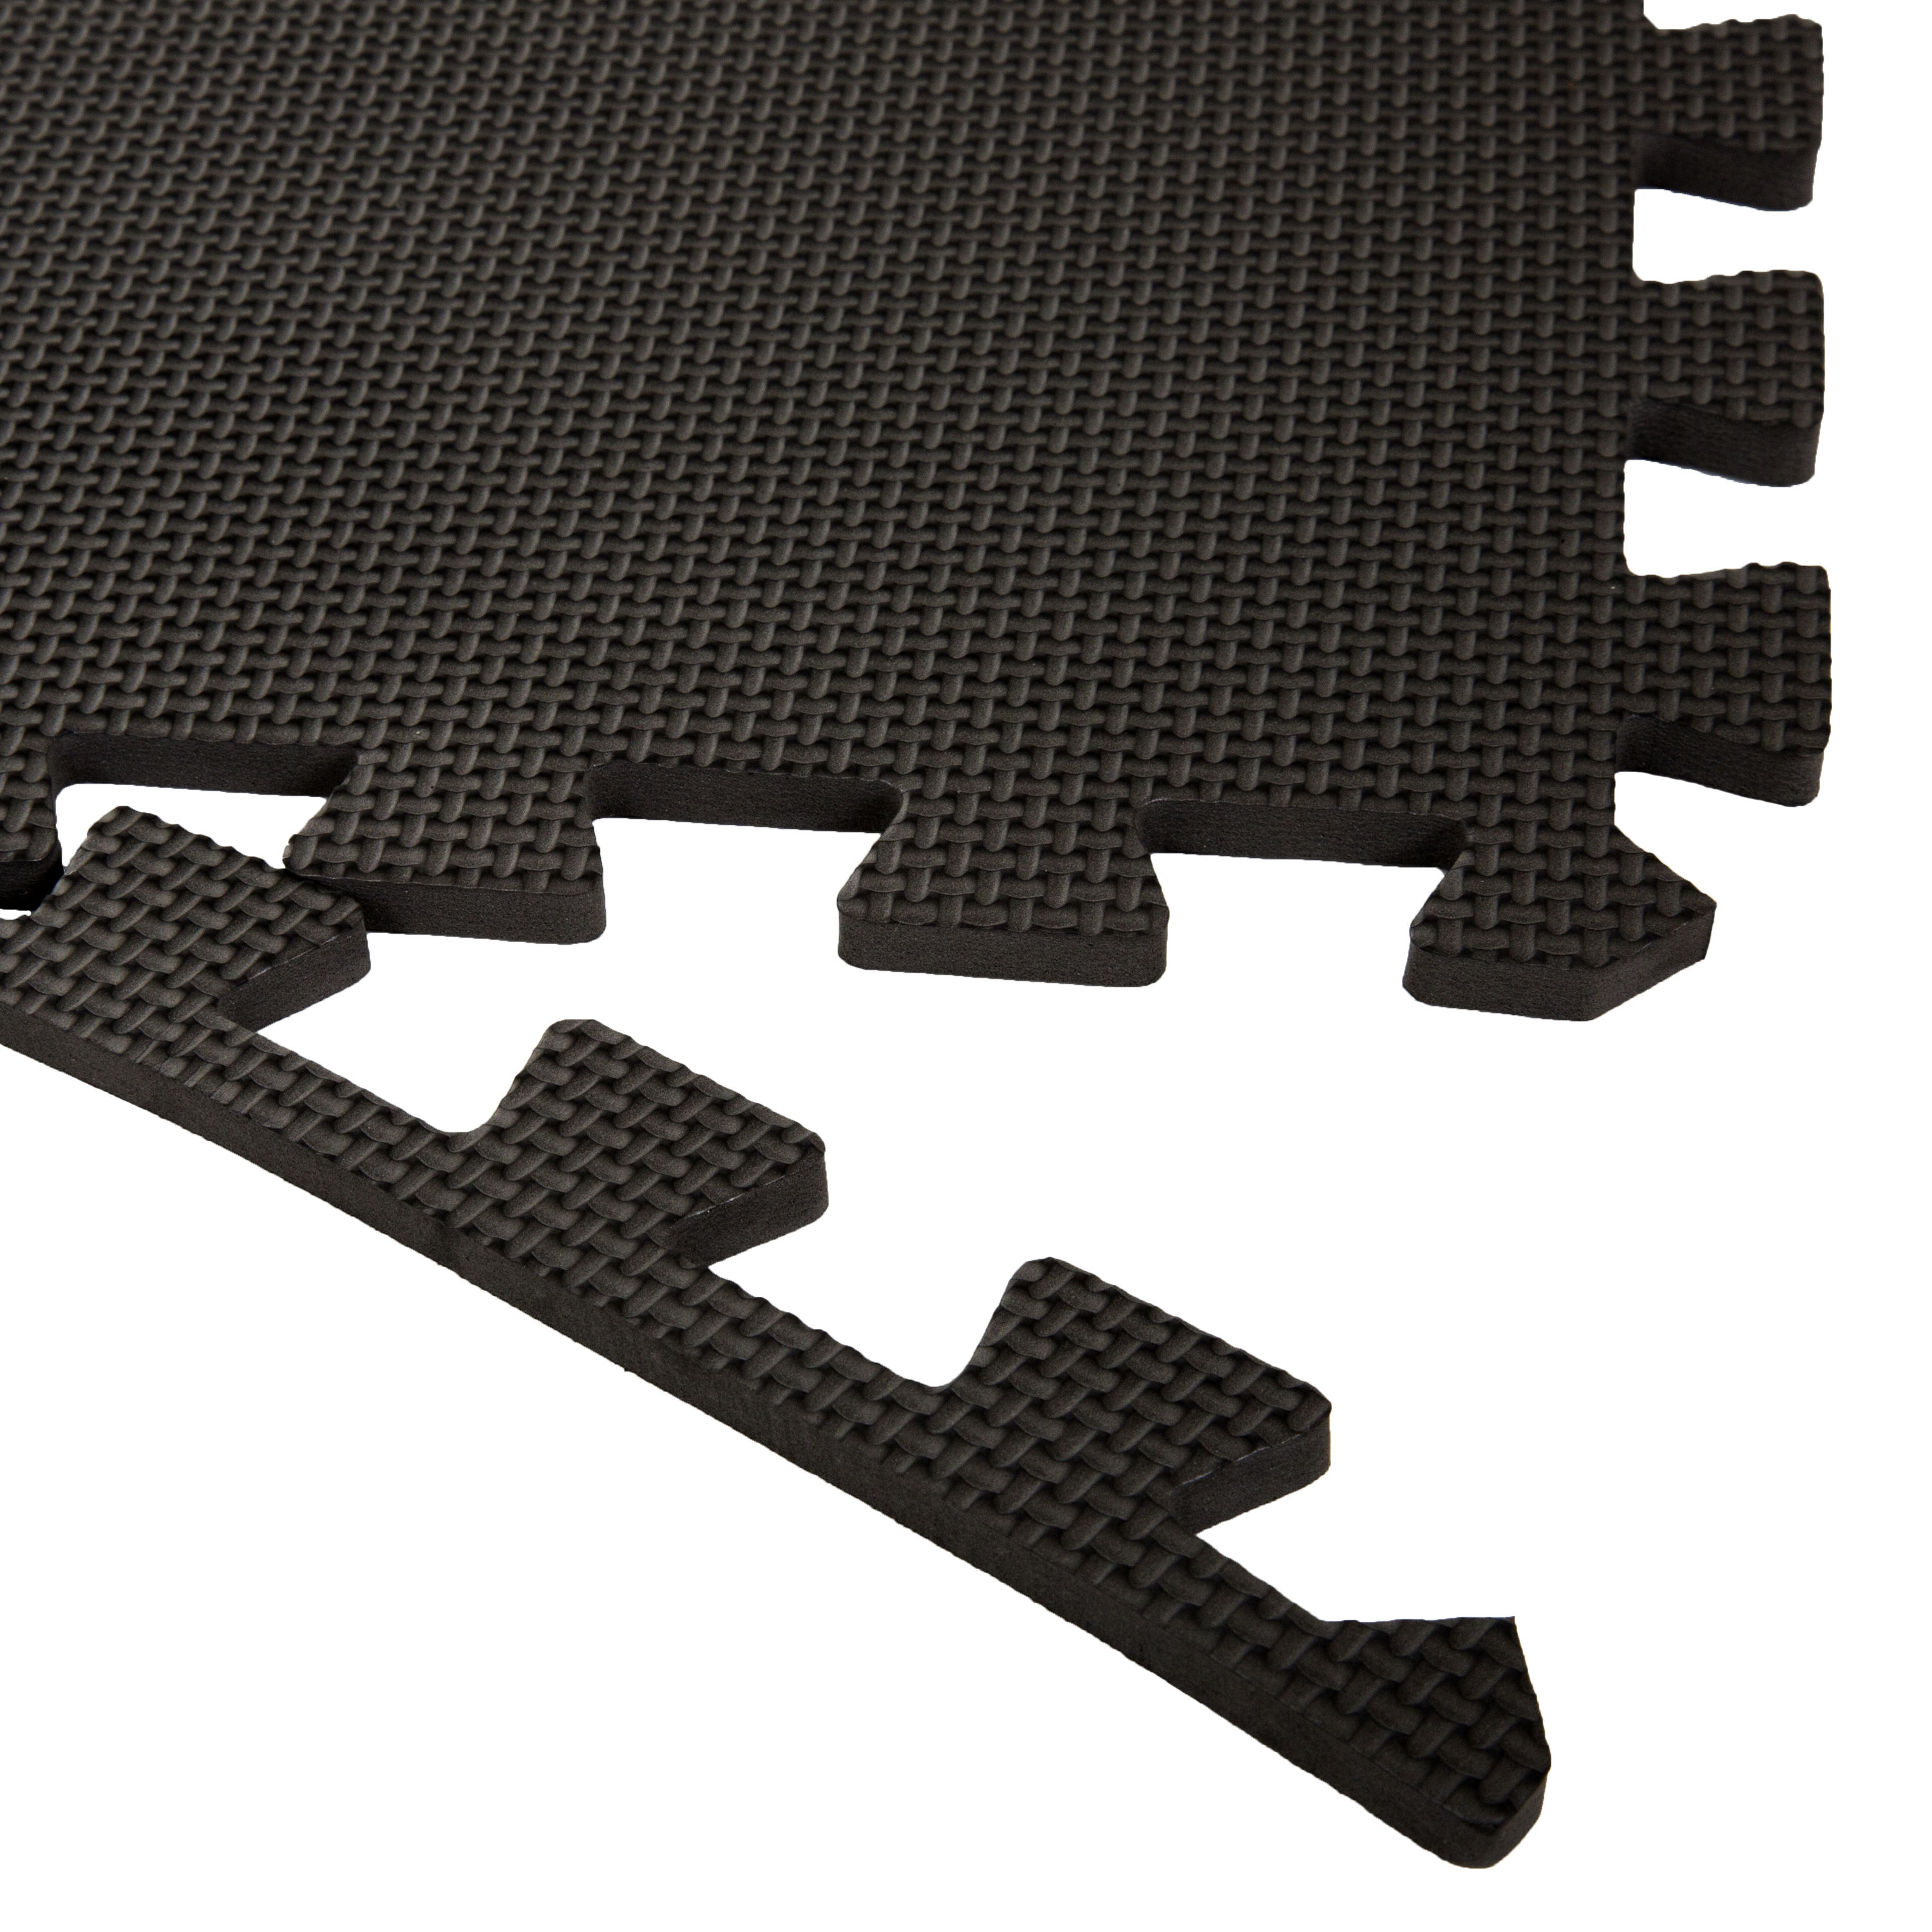 Gym Floor Tiles, Interlocking EVA Foam Padding 6 Pack, 24 X 24 X